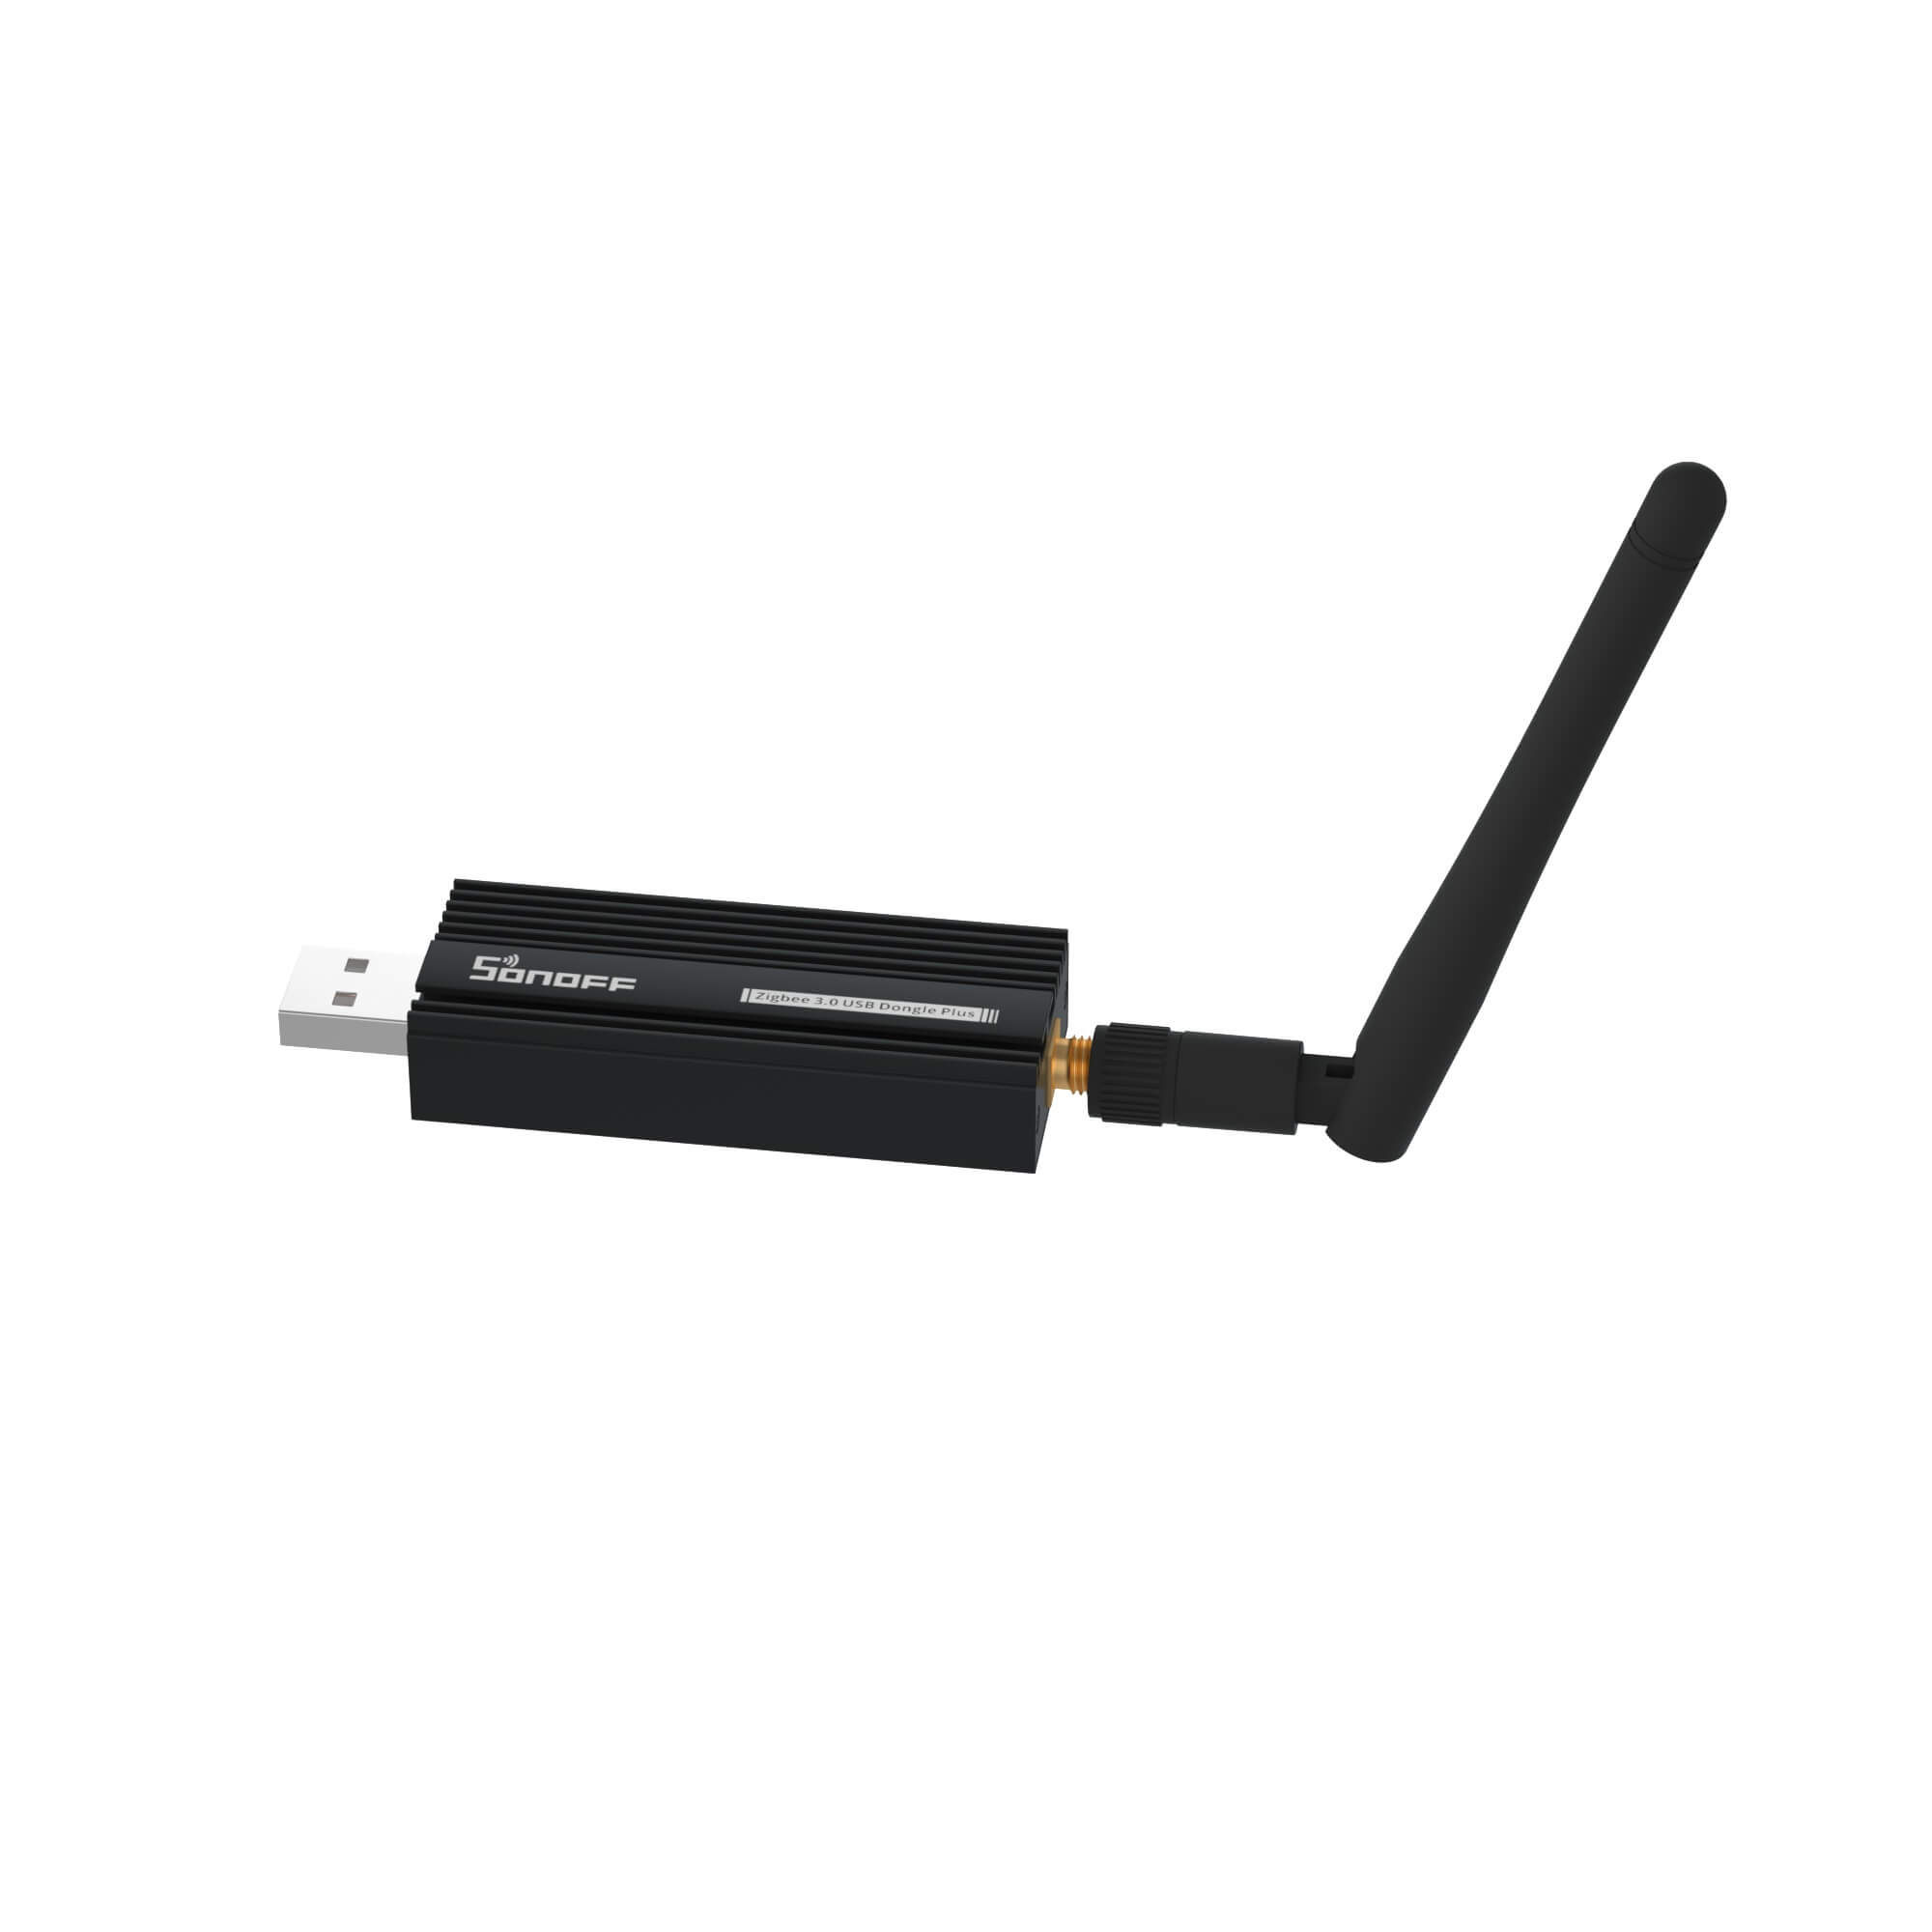  SONOFF Zigbee 3.0 USB Dongle Plus Gateway, Universal